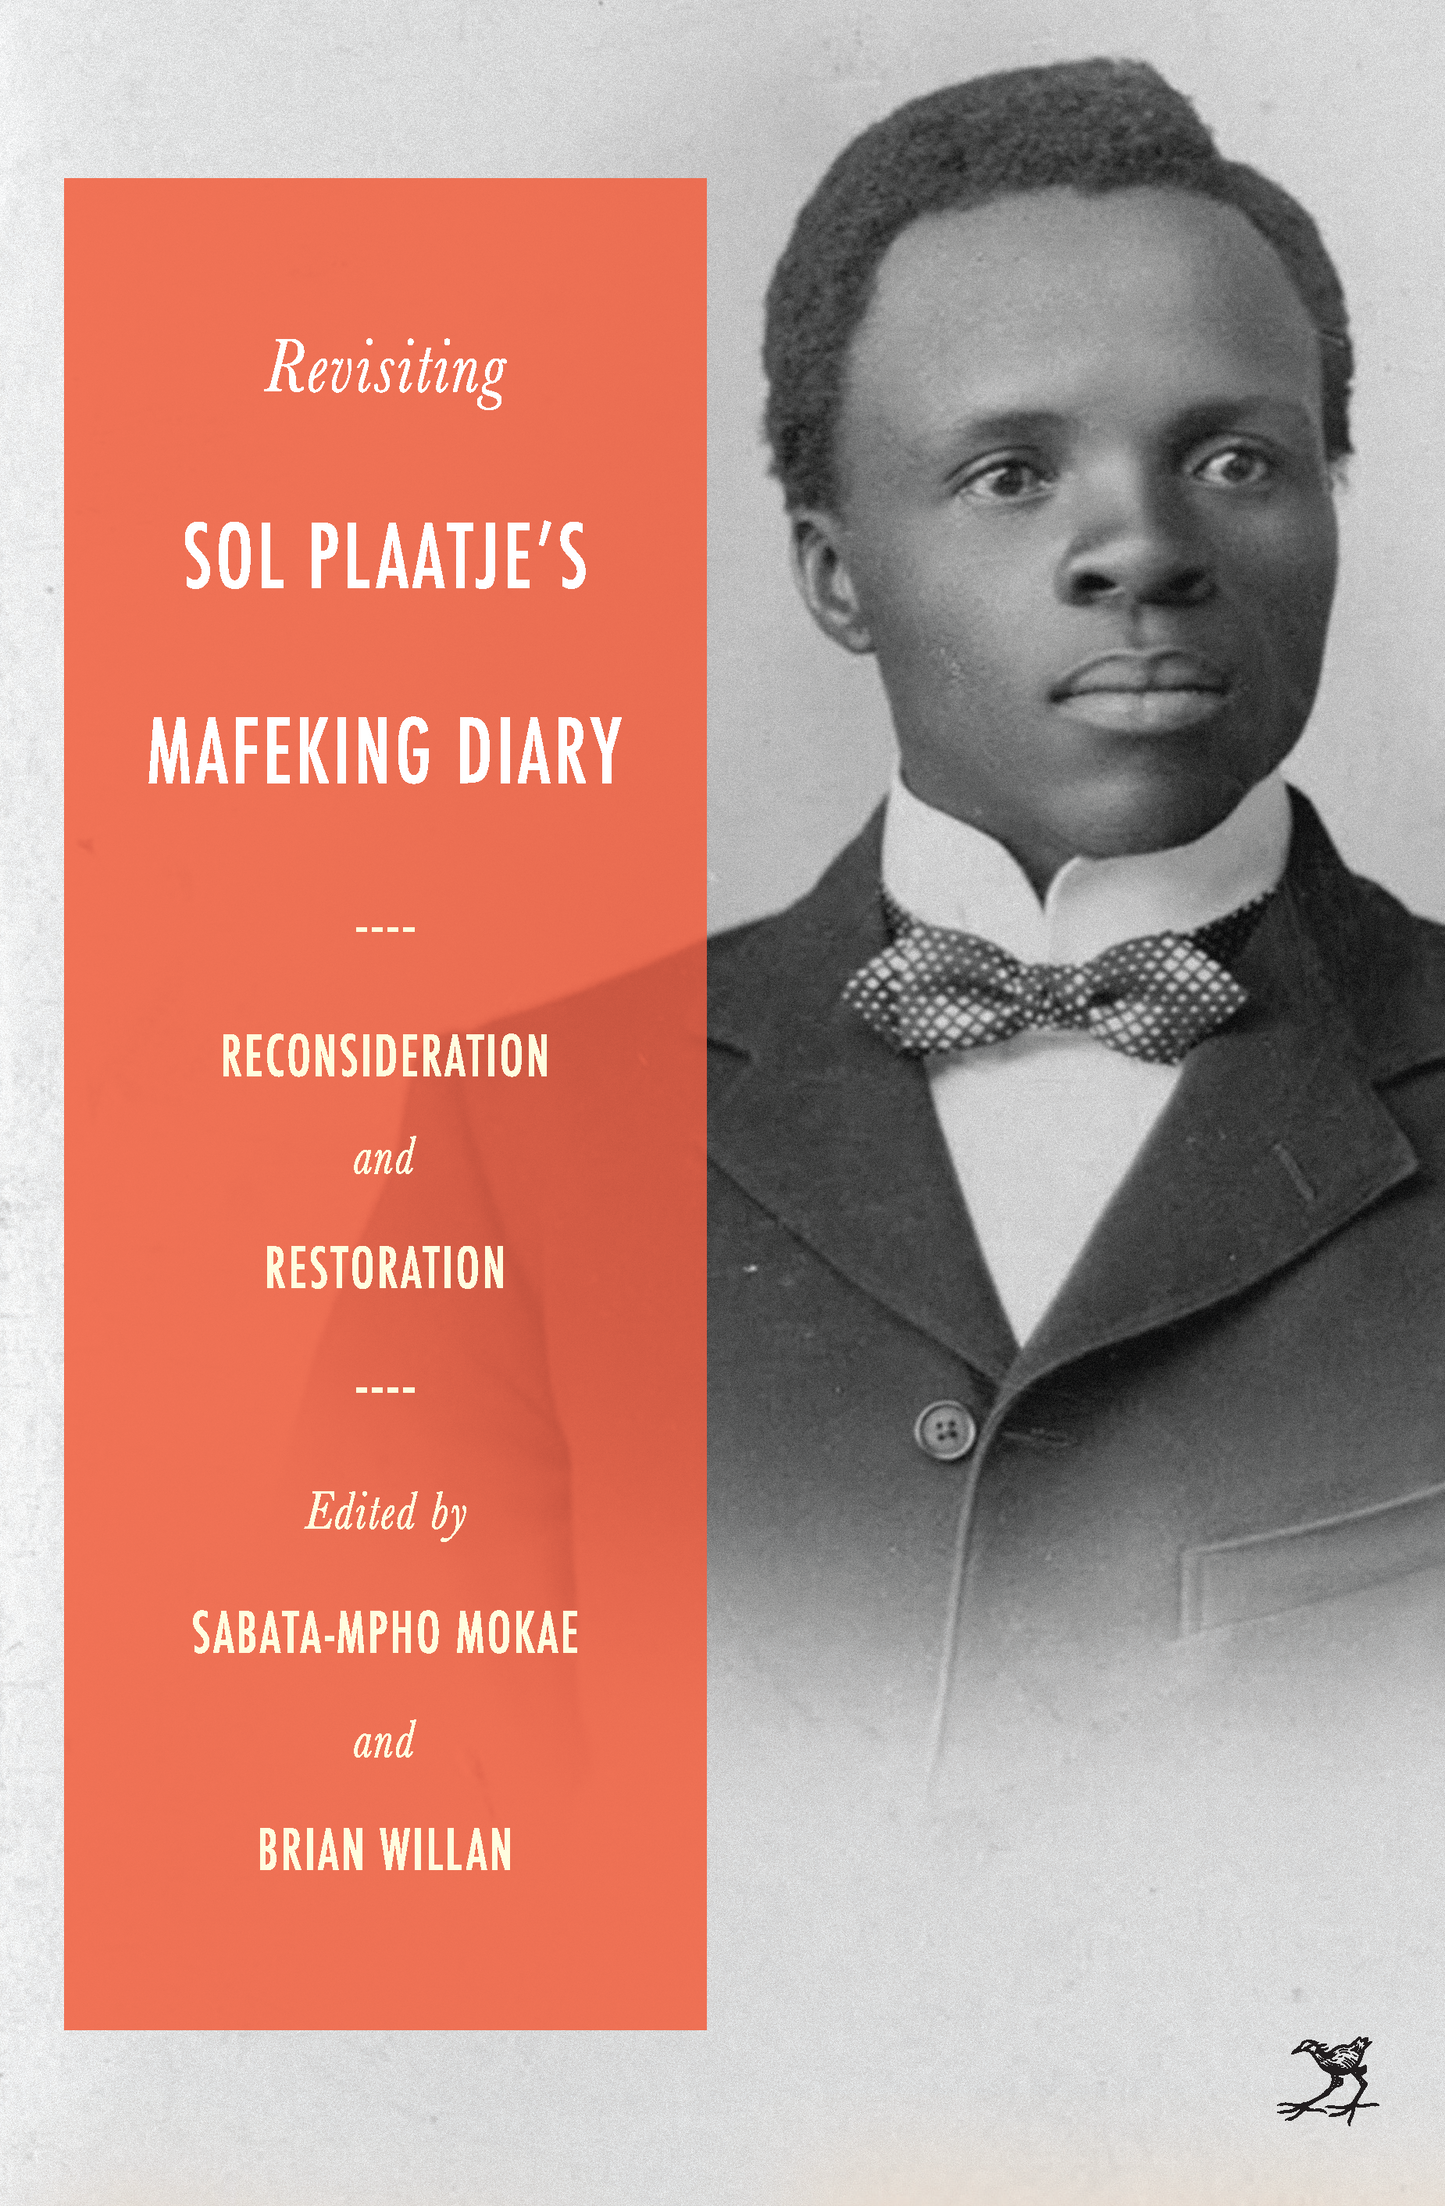 Revisiting Sol Plaatje’s Mafeking Diary: Reconsideration and restoration, by Edited by Sabata-Mpho Mokae and Brian Willan